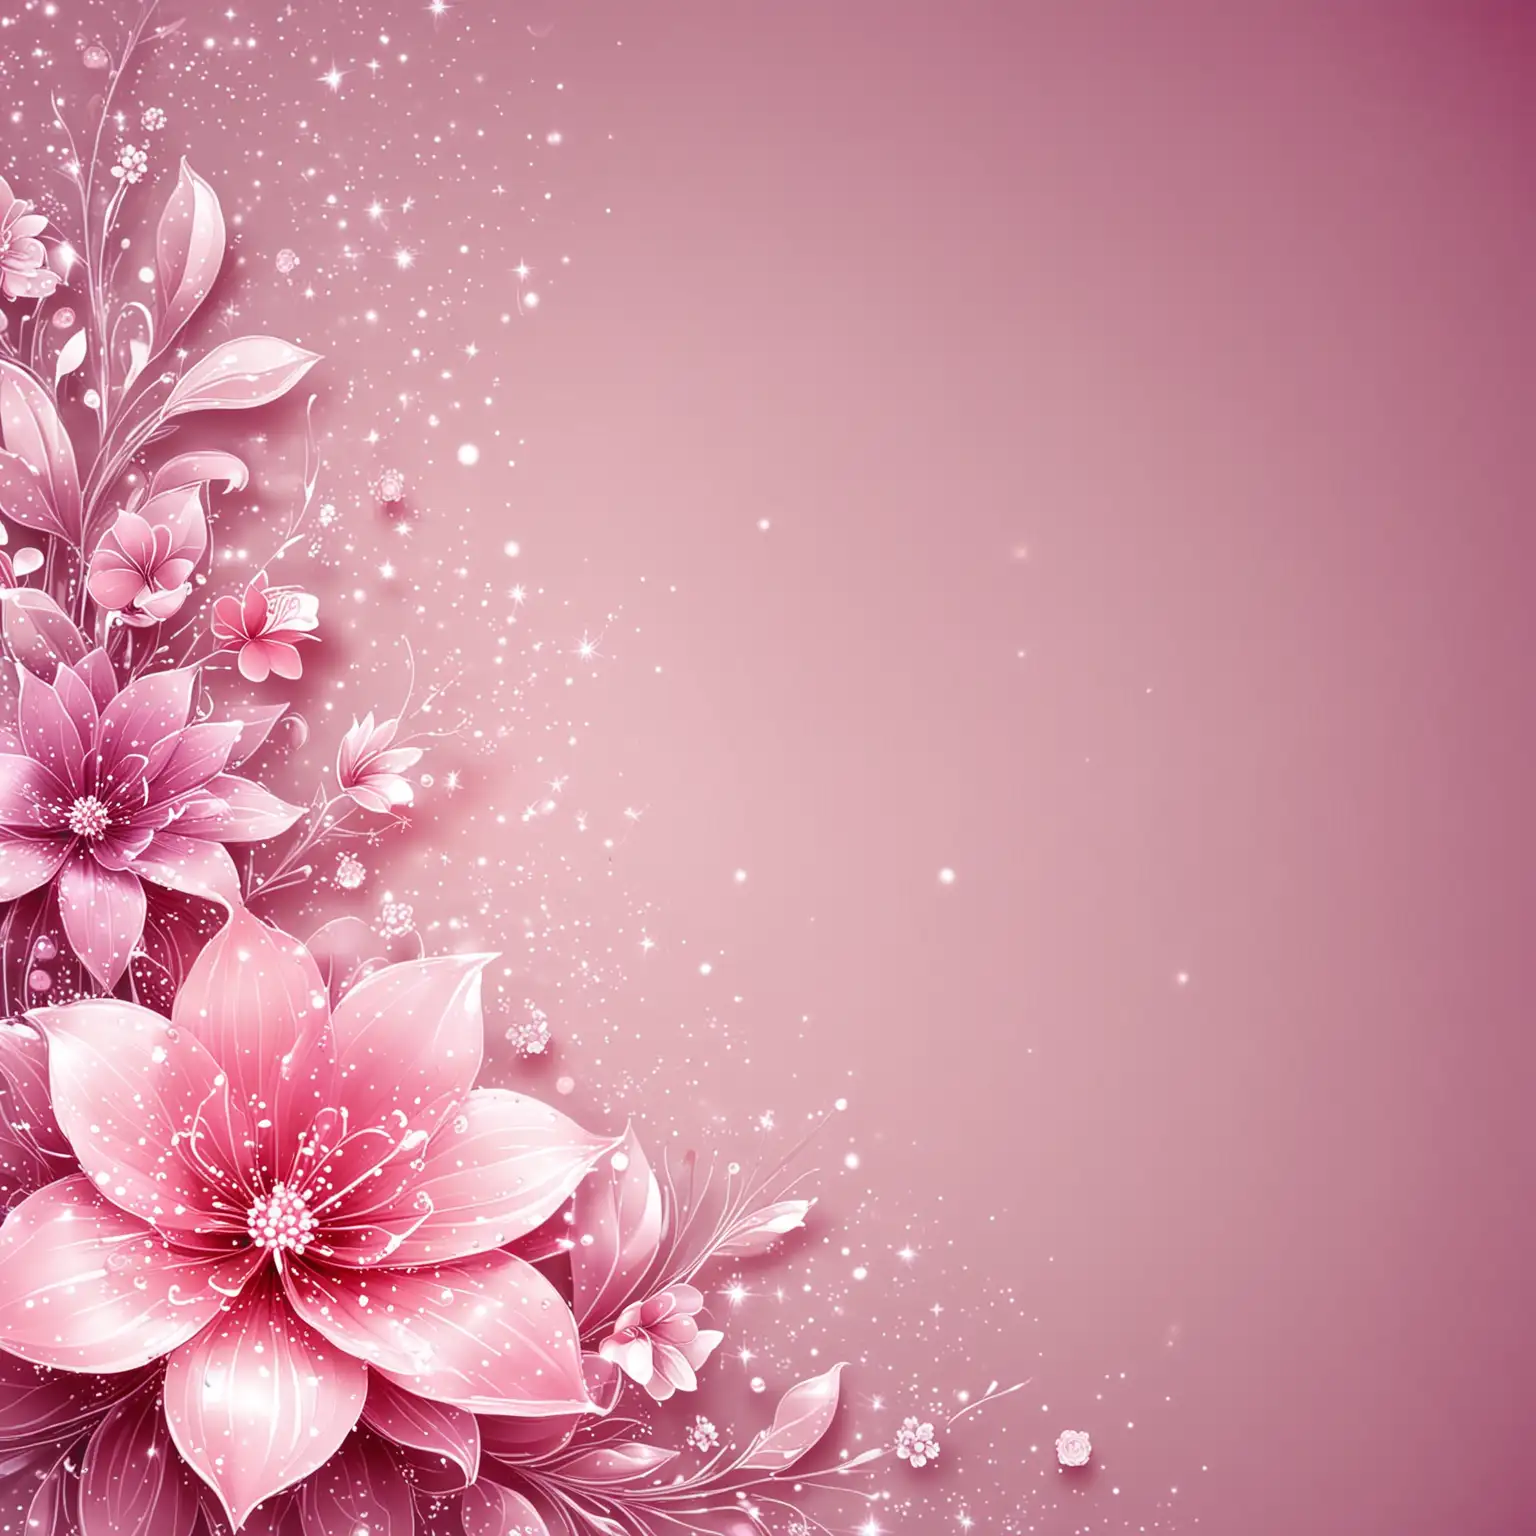 beautoful sparkly flower background